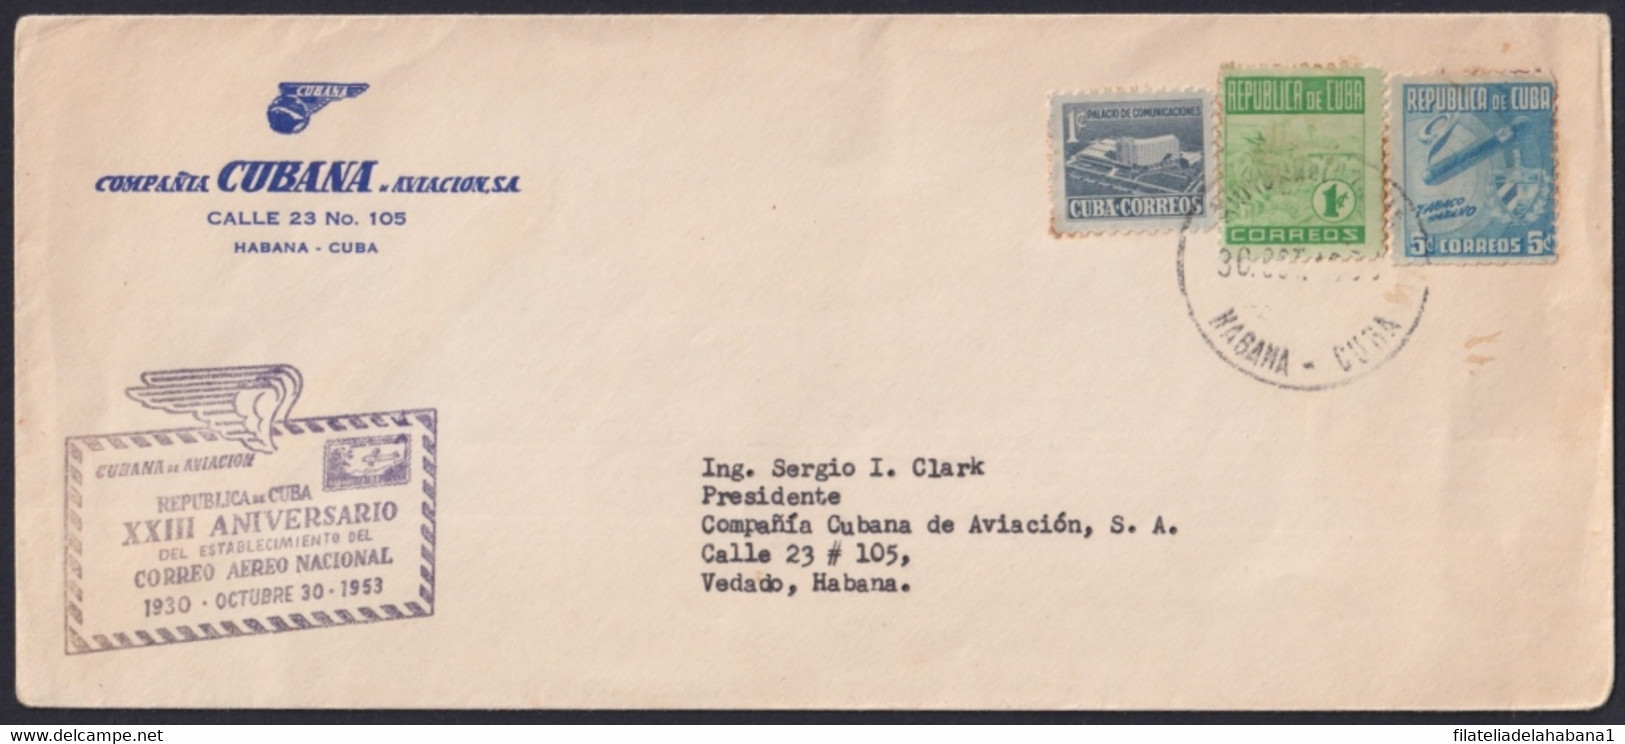 1953-CE-15 CUBA REPUBLICA LG-2142 XXIII ANIV NATIONAL AIR MAIL CANCEL COVER. - Lettres & Documents